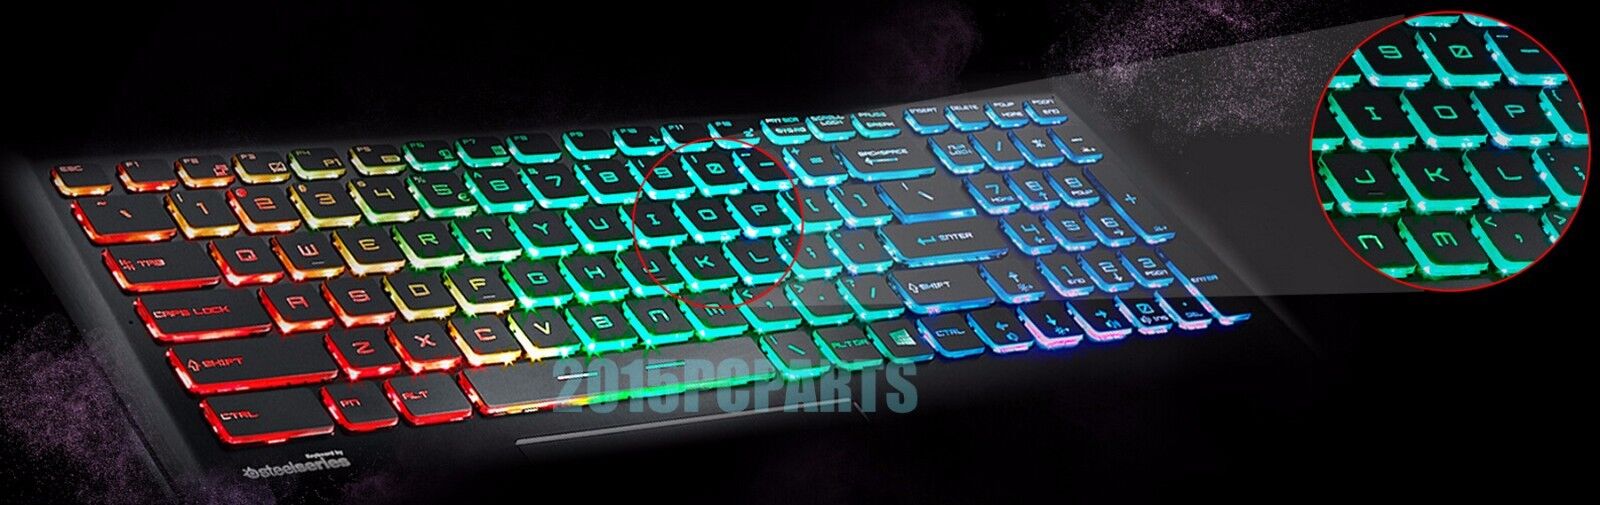 MSI GS70 2QC 2QD 2QE 6QC 6QD Stealth Pro keyboard US Colorful Backlit Crystal